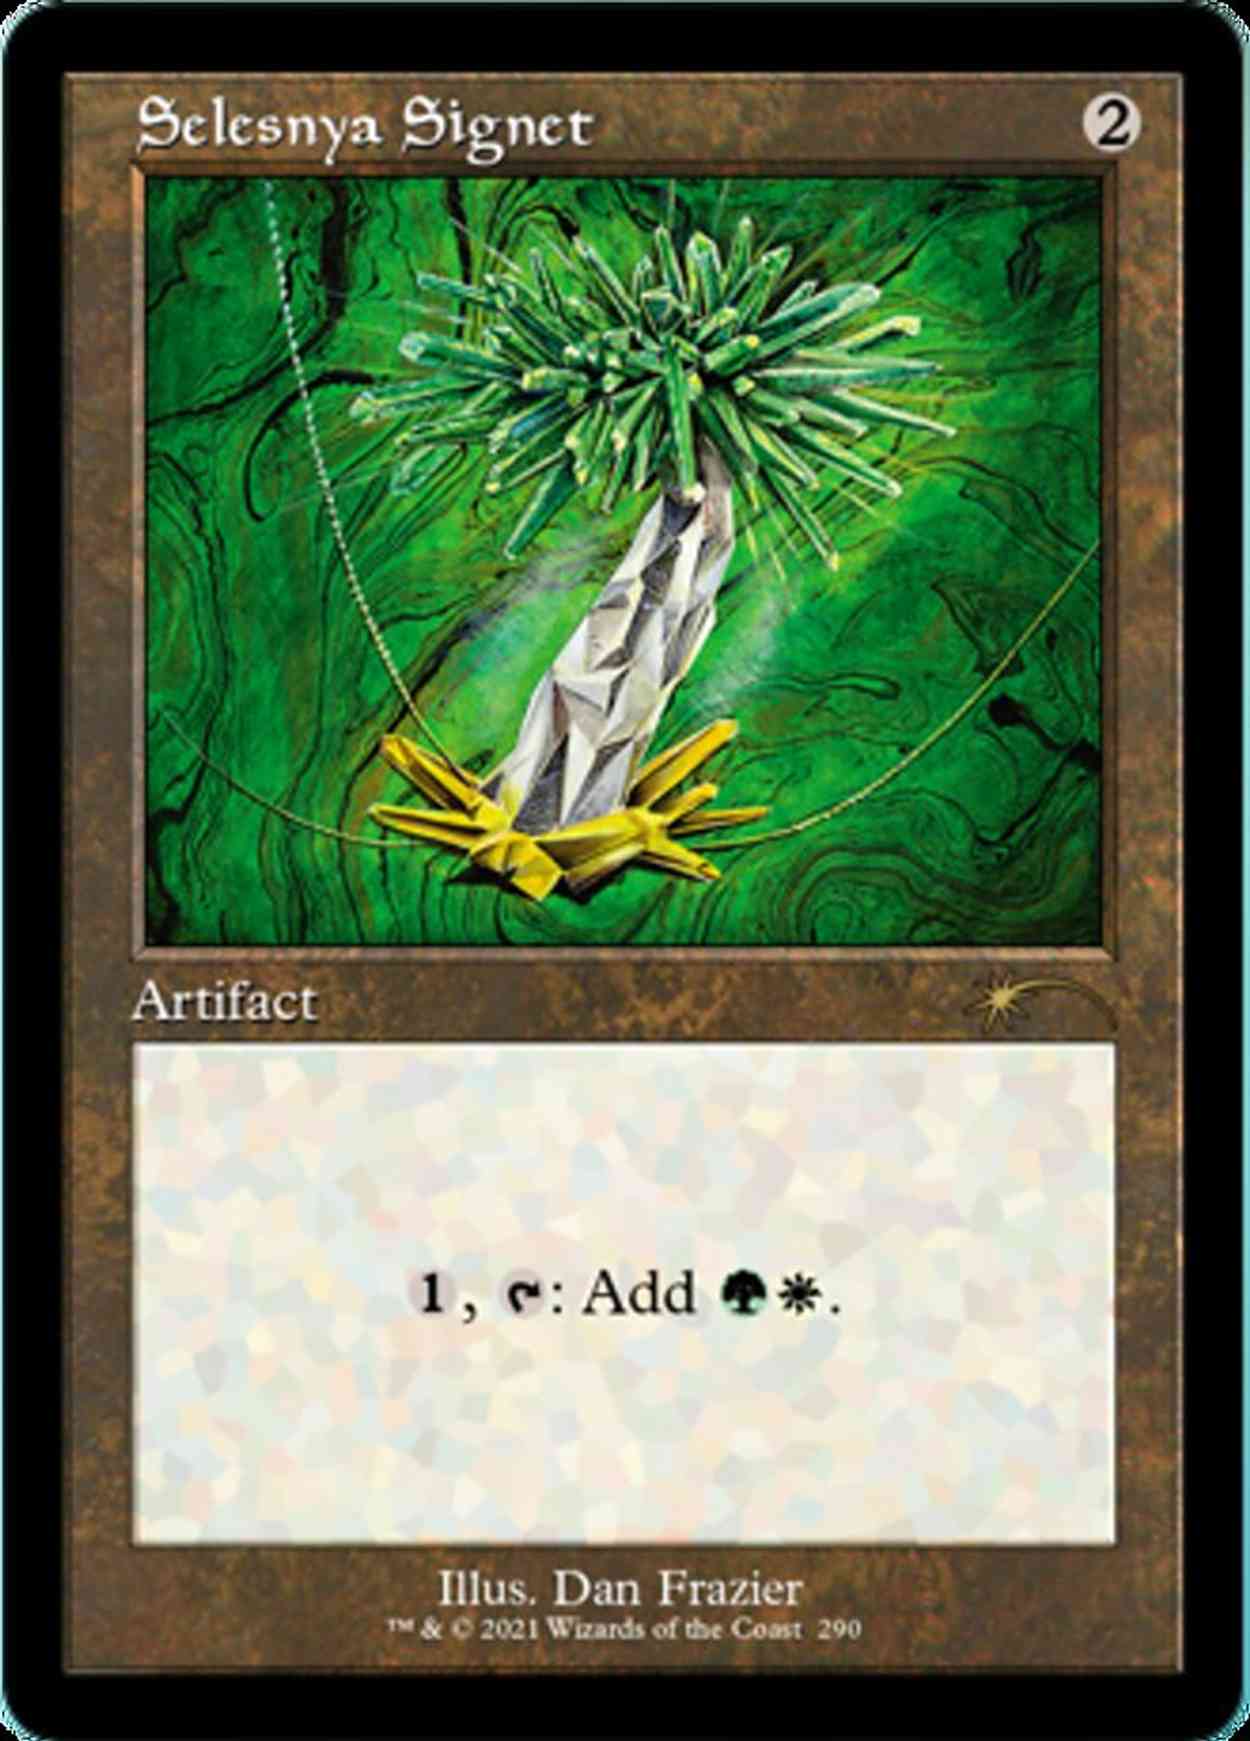 Selesnya Signet (Retro Frame) (Foil Etched) magic card front